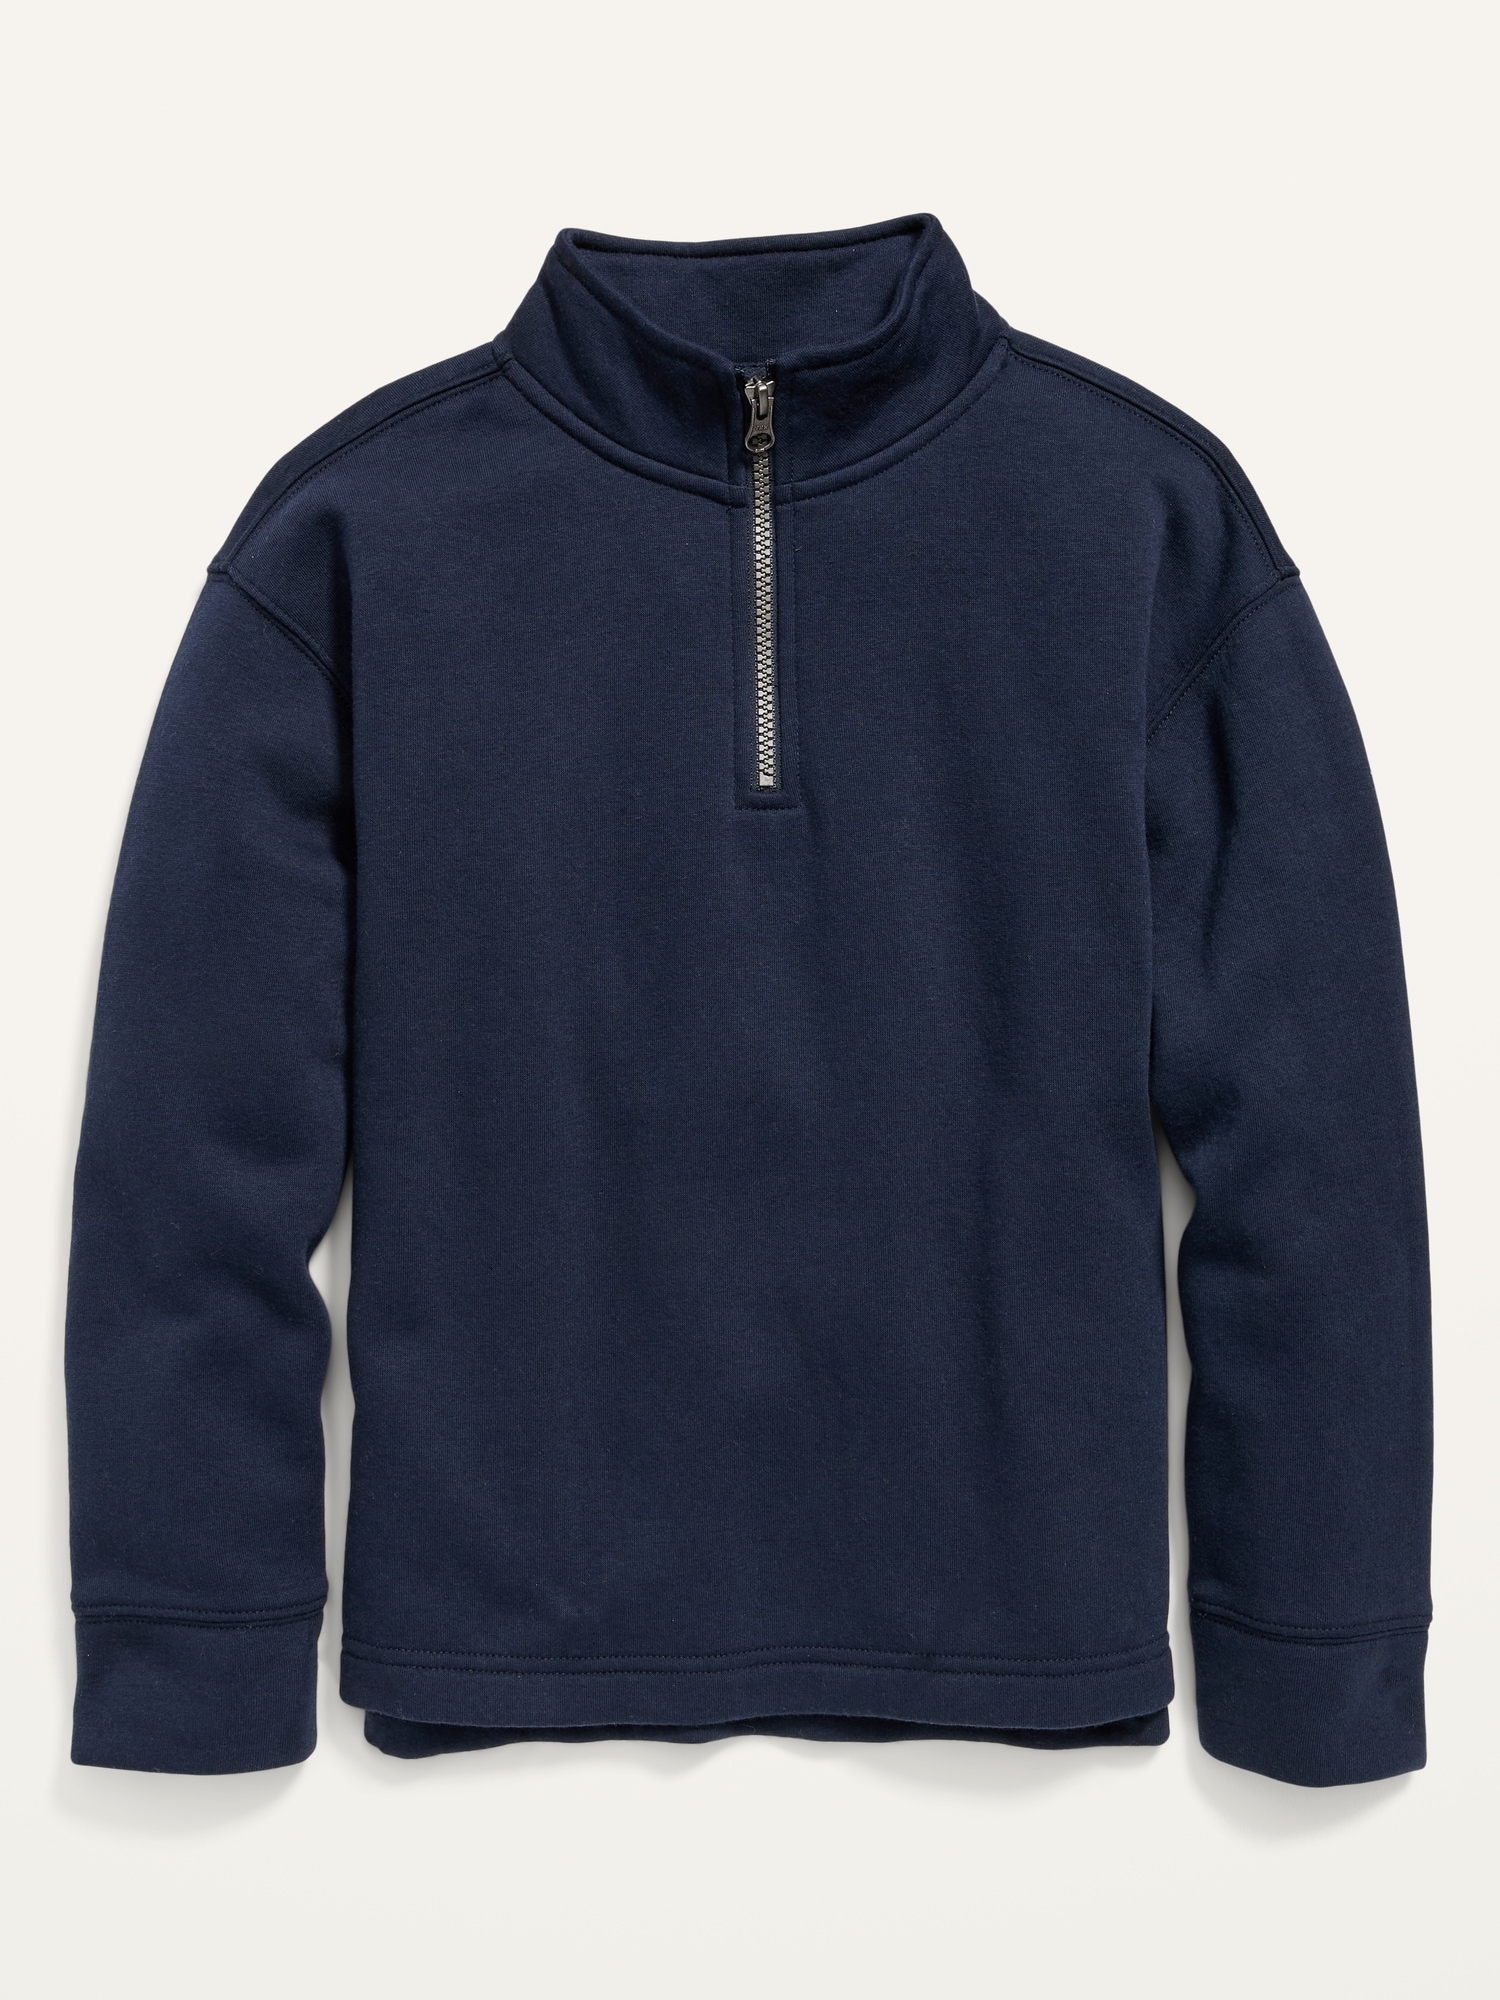 Long-Sleeve Gender-Neutral Quarter-Zip Sweatshirt for Kids | Old Navy